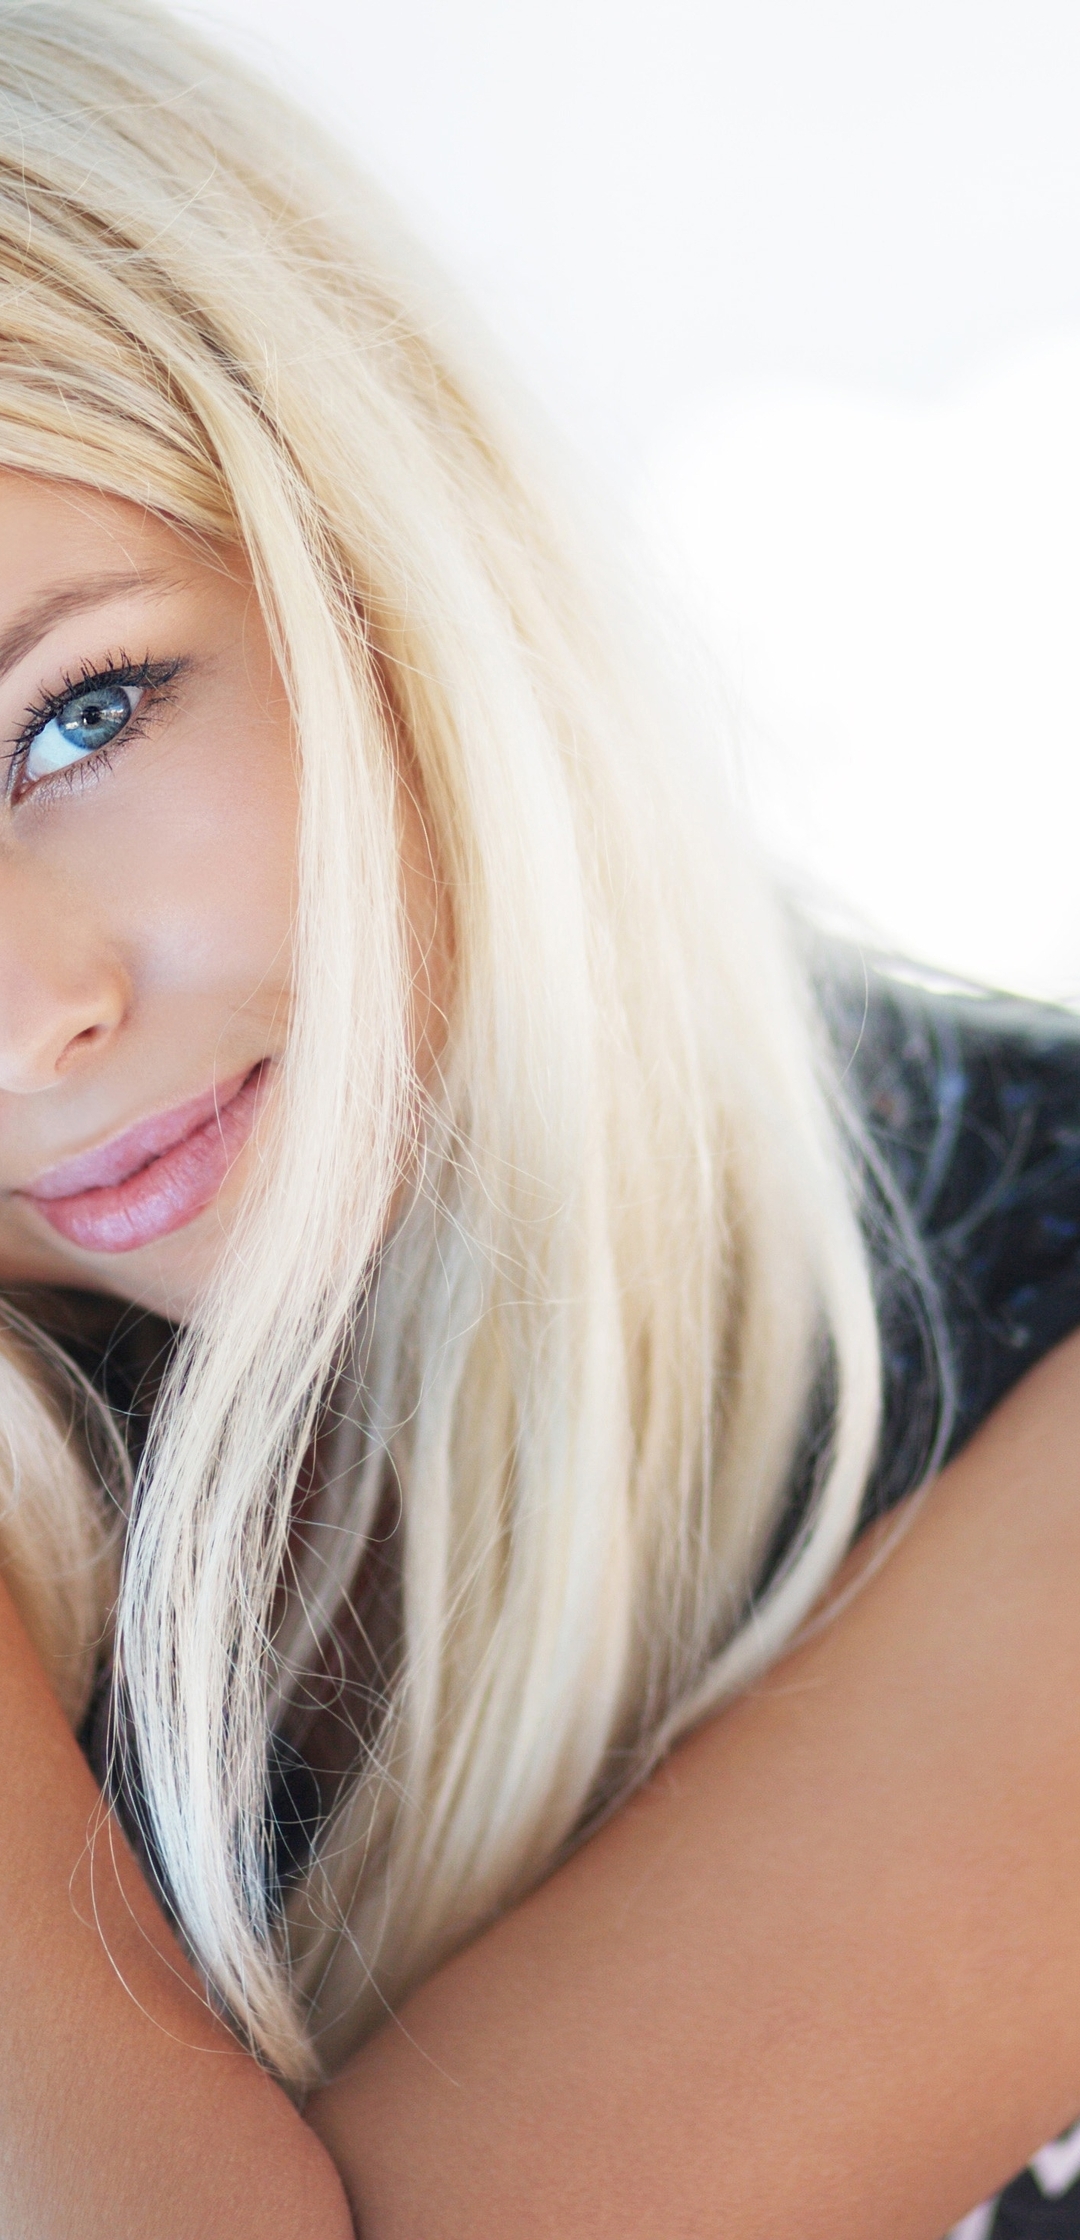 Image: Blonde, girl, face, eyes, smile